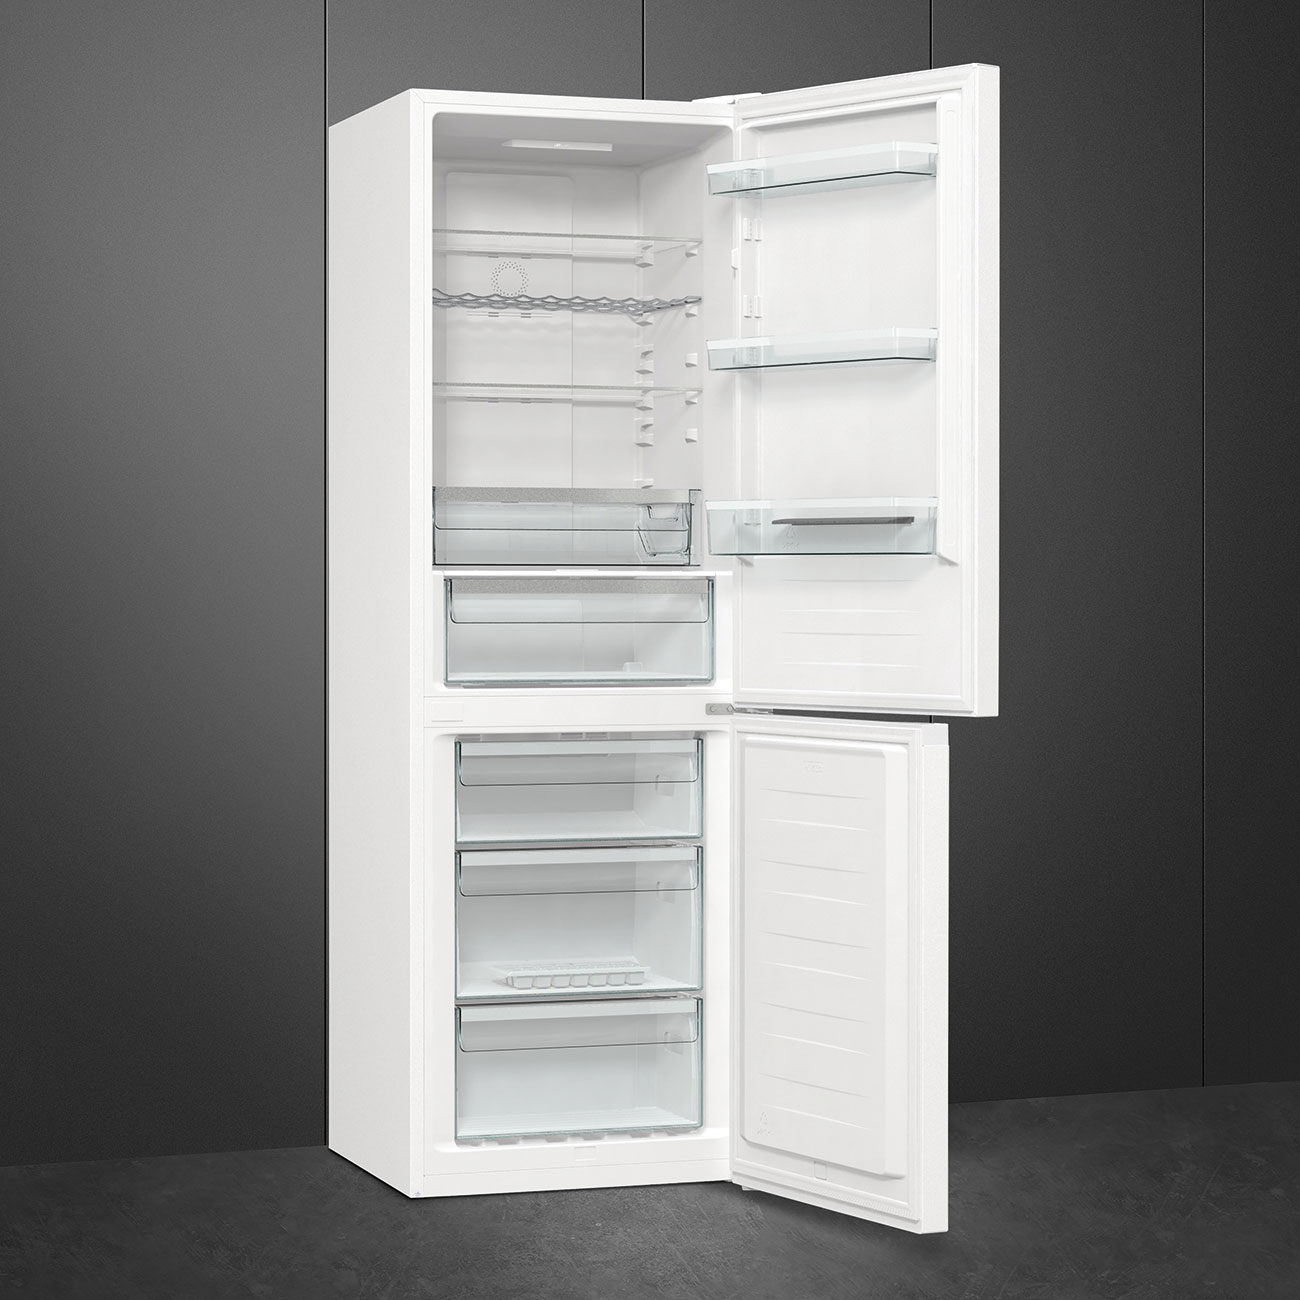 Bottom Mount Free standing refrigerator - Smeg_4